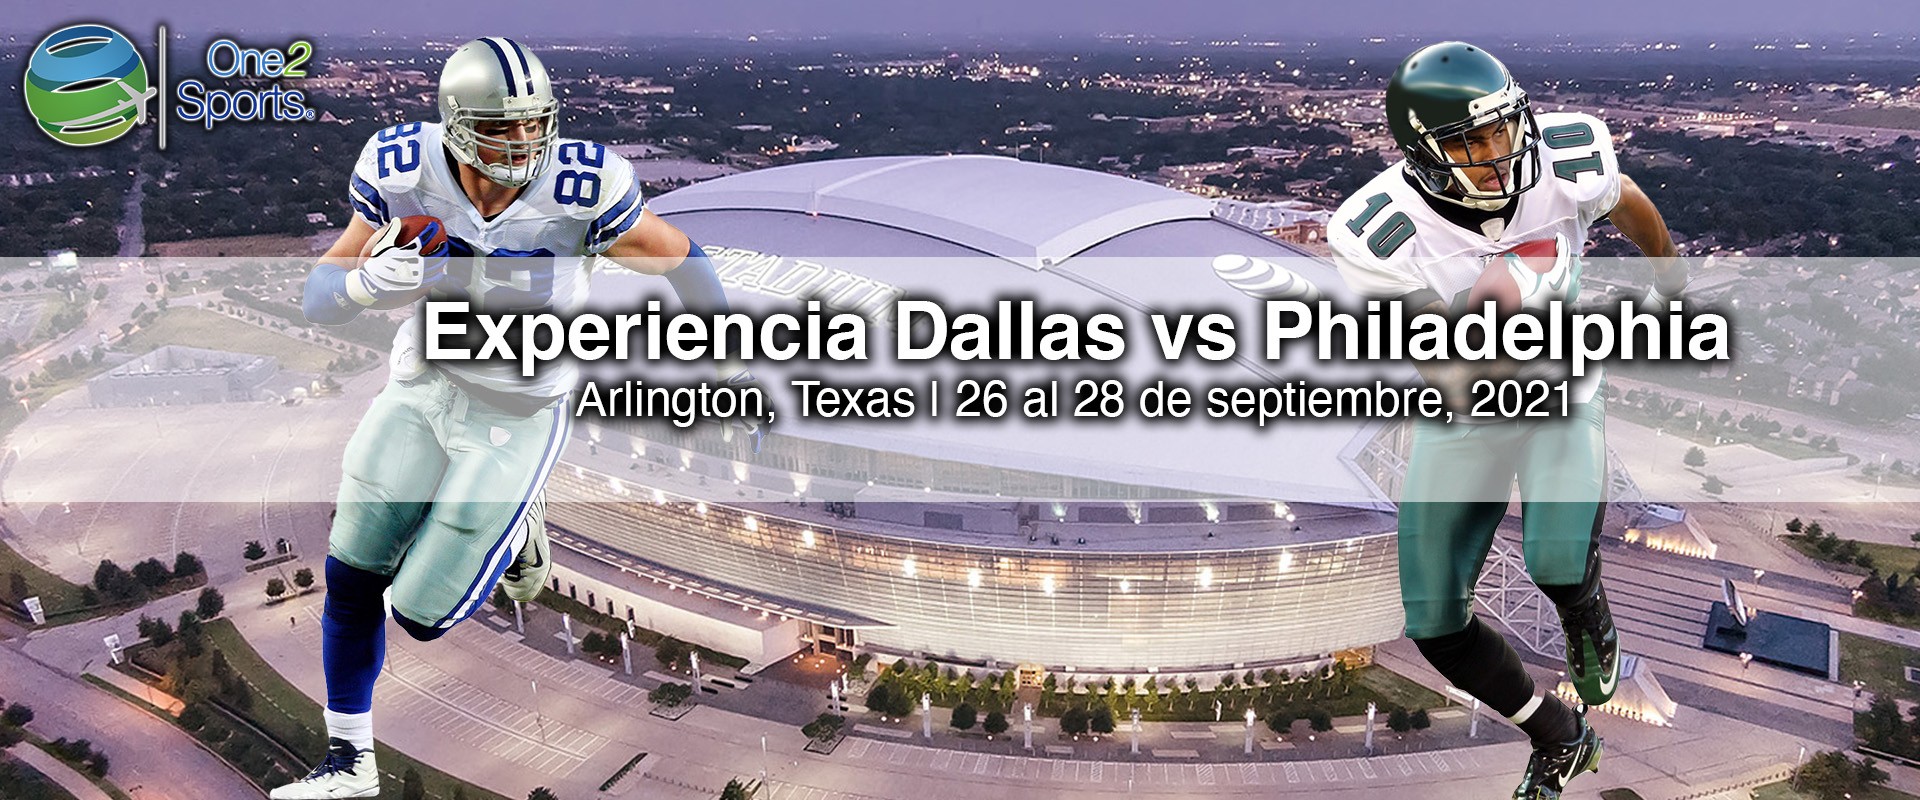 Dallas vs Philadelphia | One2 Travel Group